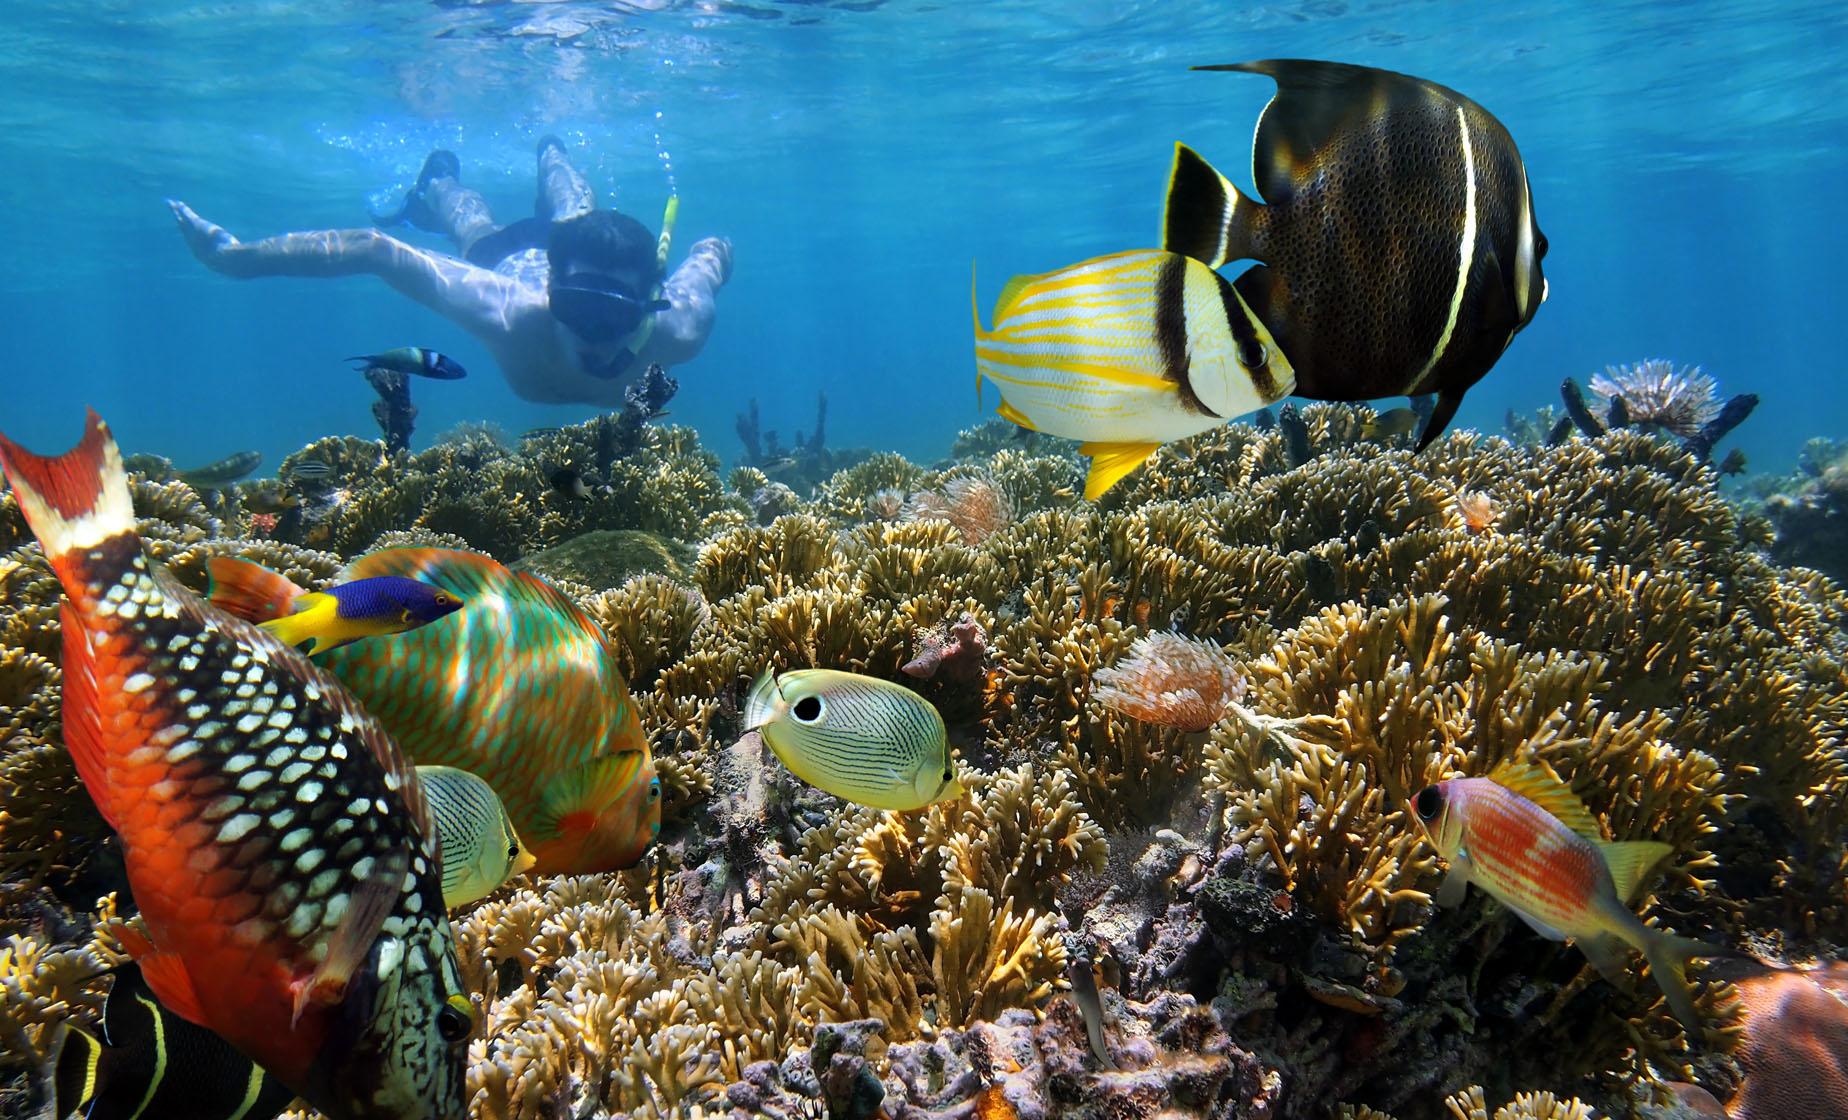 Caribbean Coral Gardens Reef and Grand Turk Wall Snorkeling (Columbus Landfall Marine National Park)